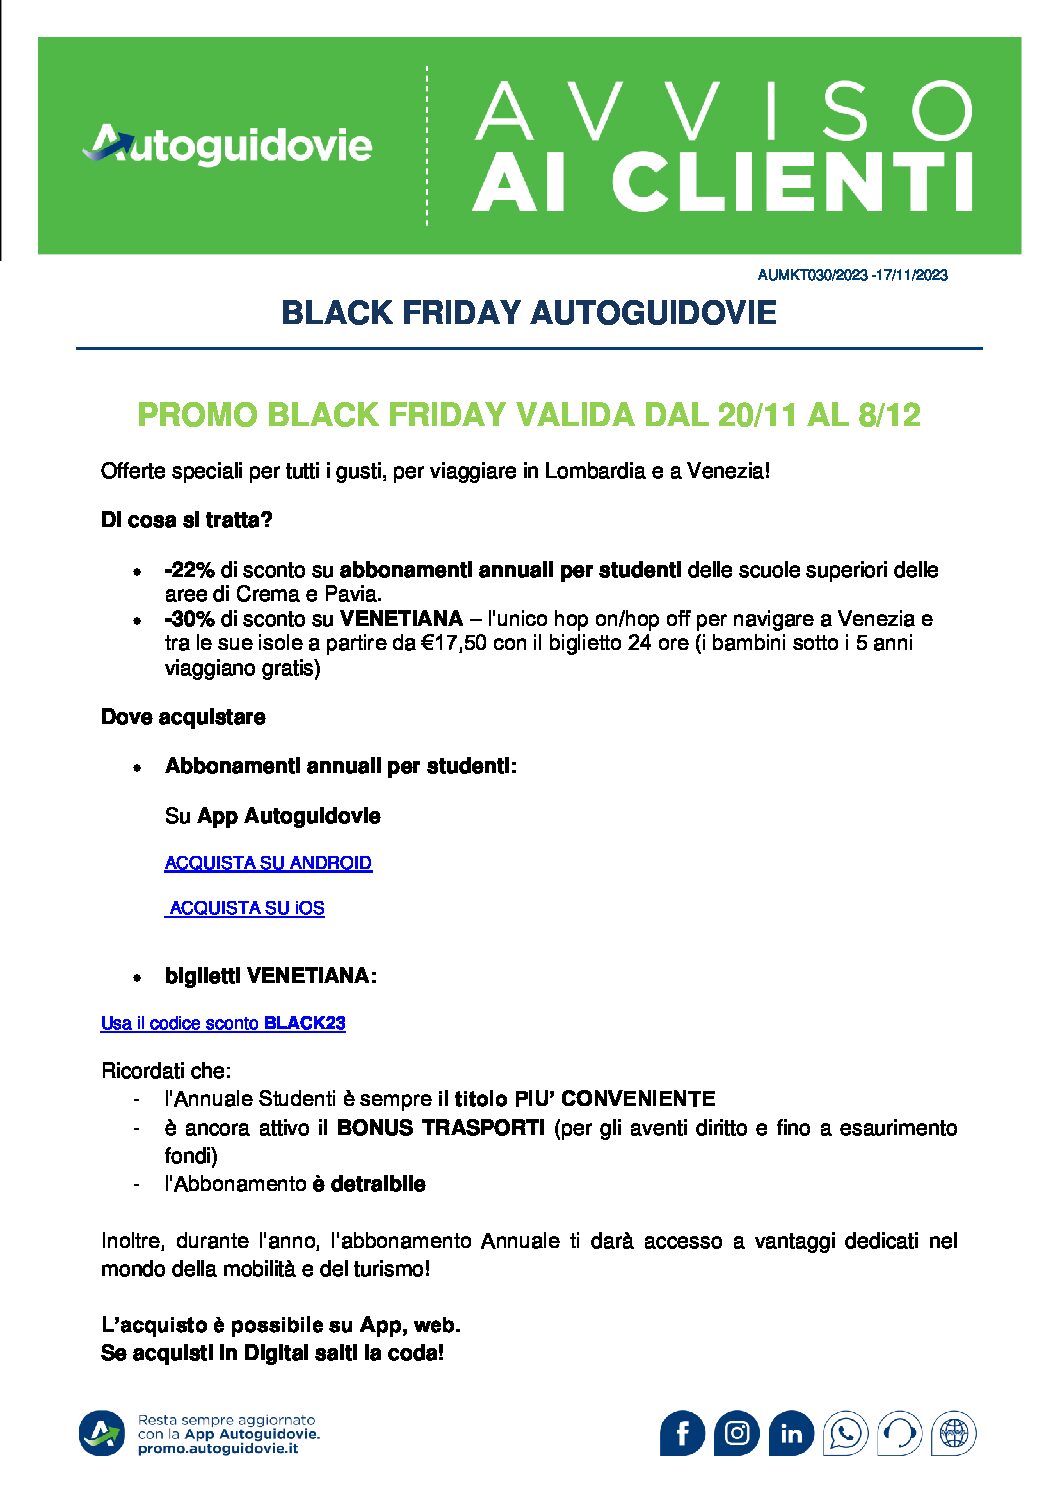 Black Friday Autoguidovie: promo valida dal 20/11 al 08/12 2023